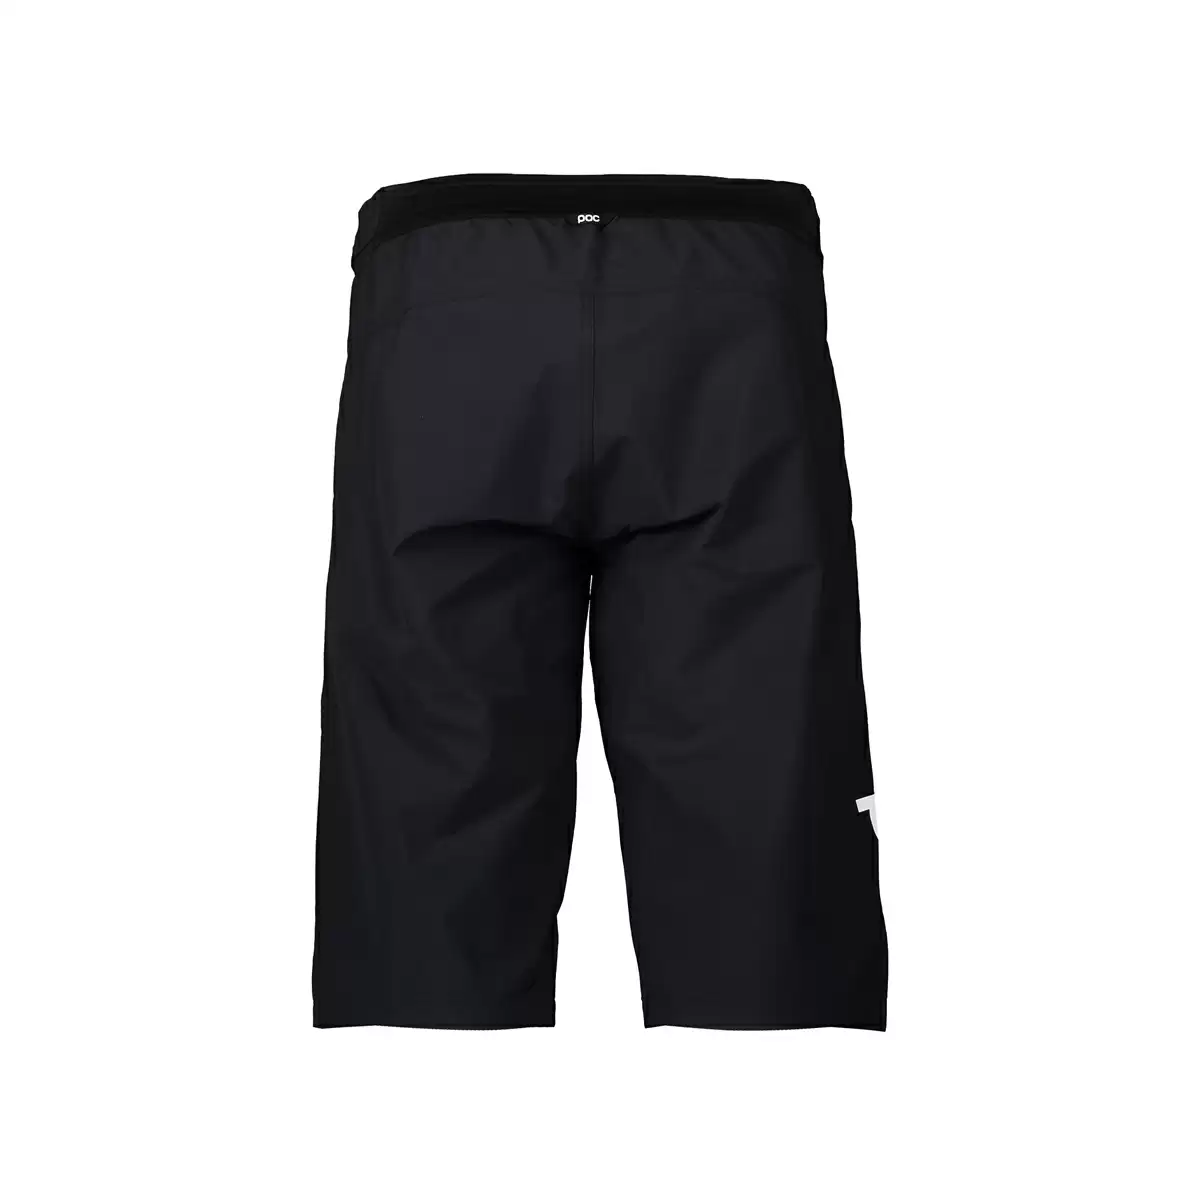 Pantalón corto Essential Enduro negro talla M #1